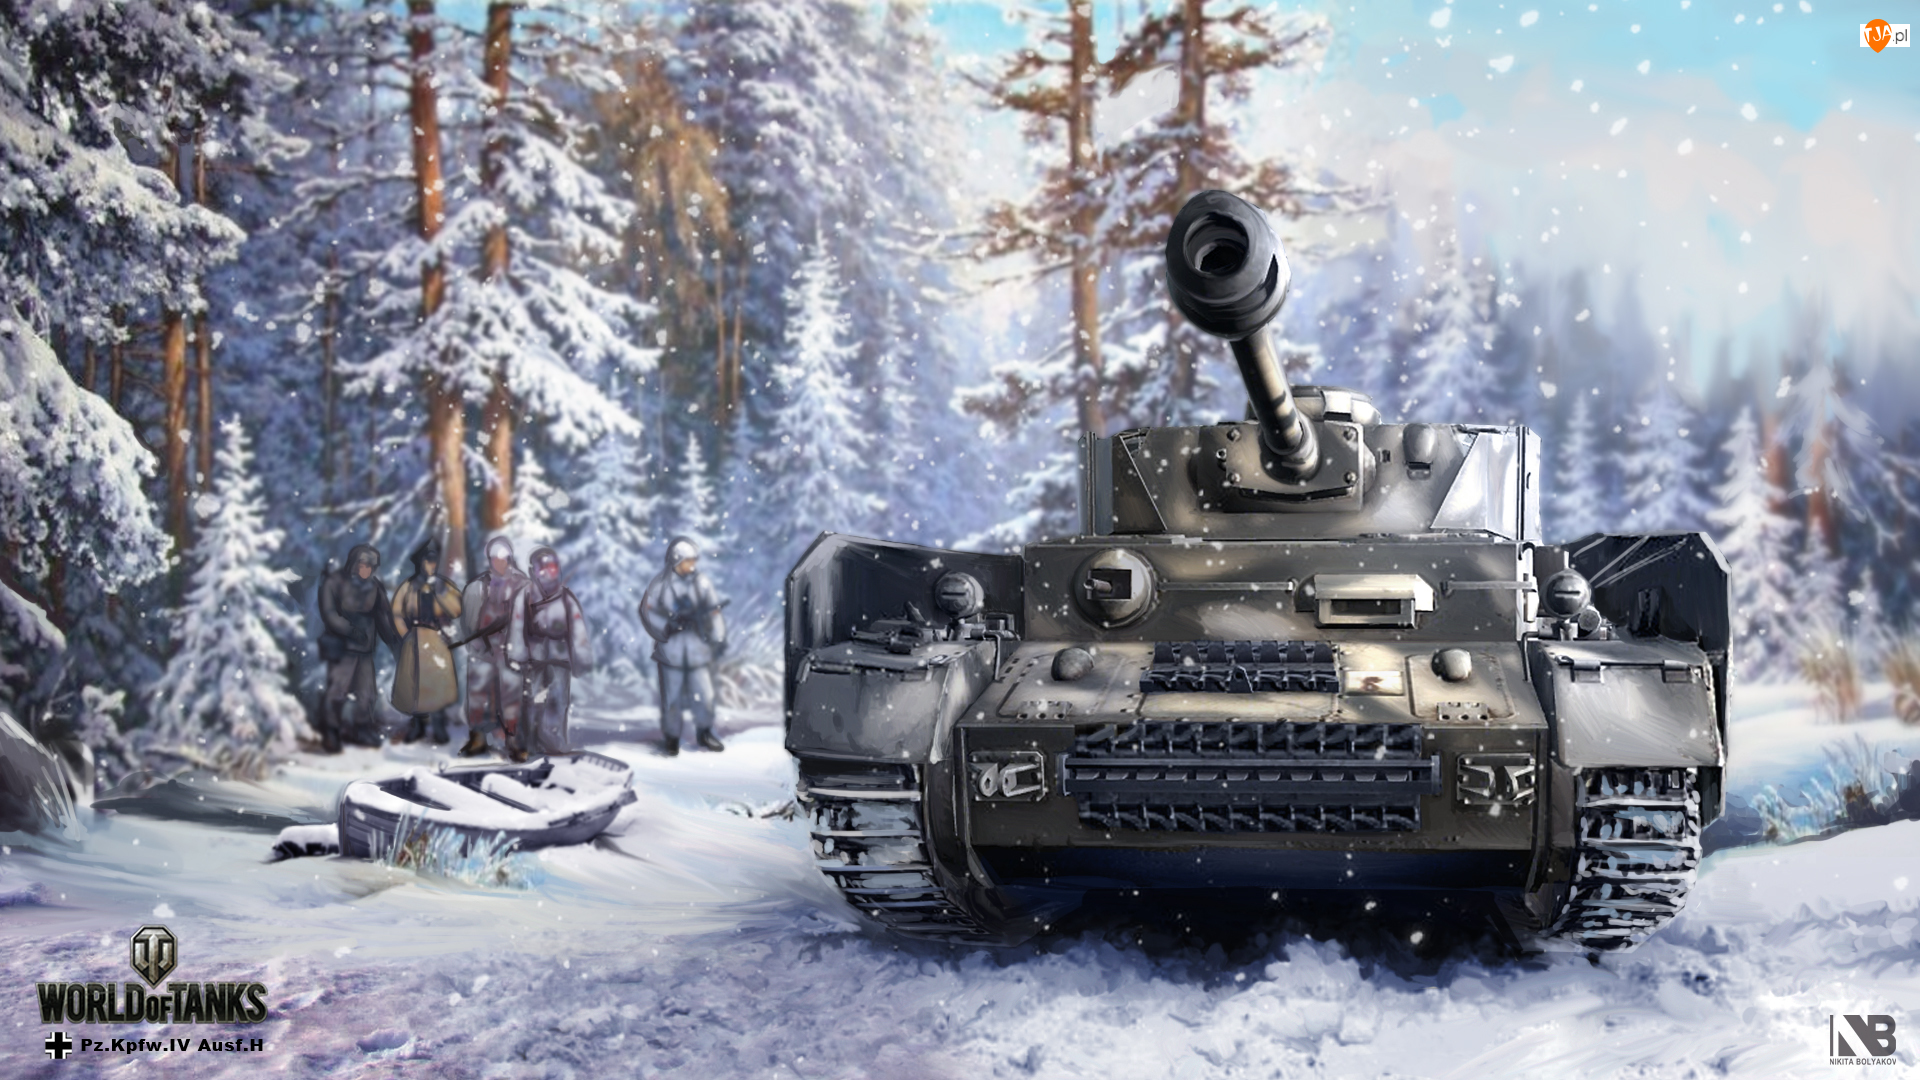 Śnieg, Czołg, World of Tanks, Pz.Kpfw.IV Ausf.H, Nikita Bolyakov, Zima